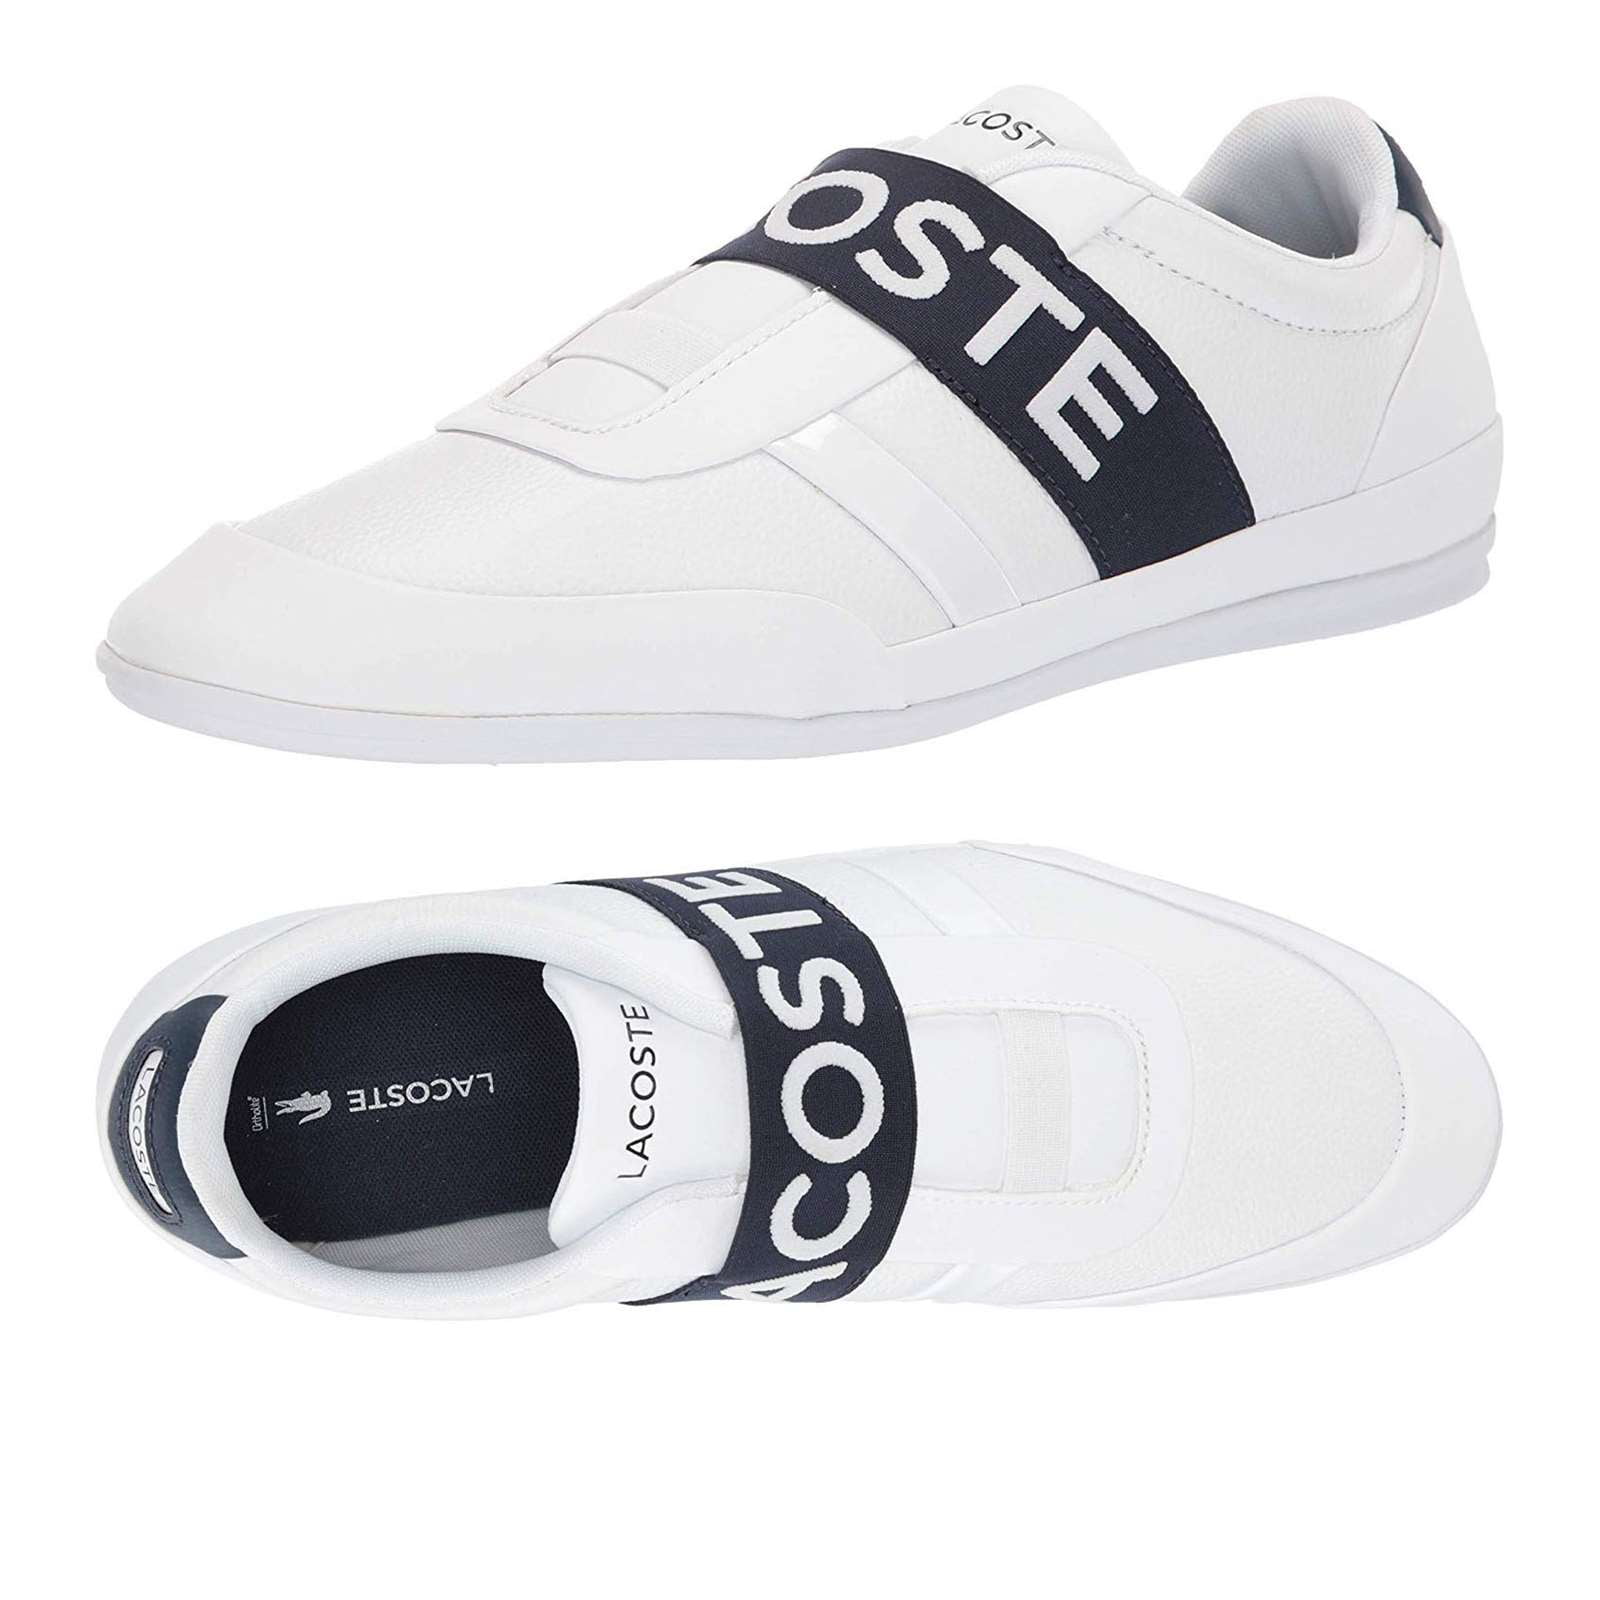 Lacoste Men's Misano 119 1 U CMA Leather Casual Sneakers White 